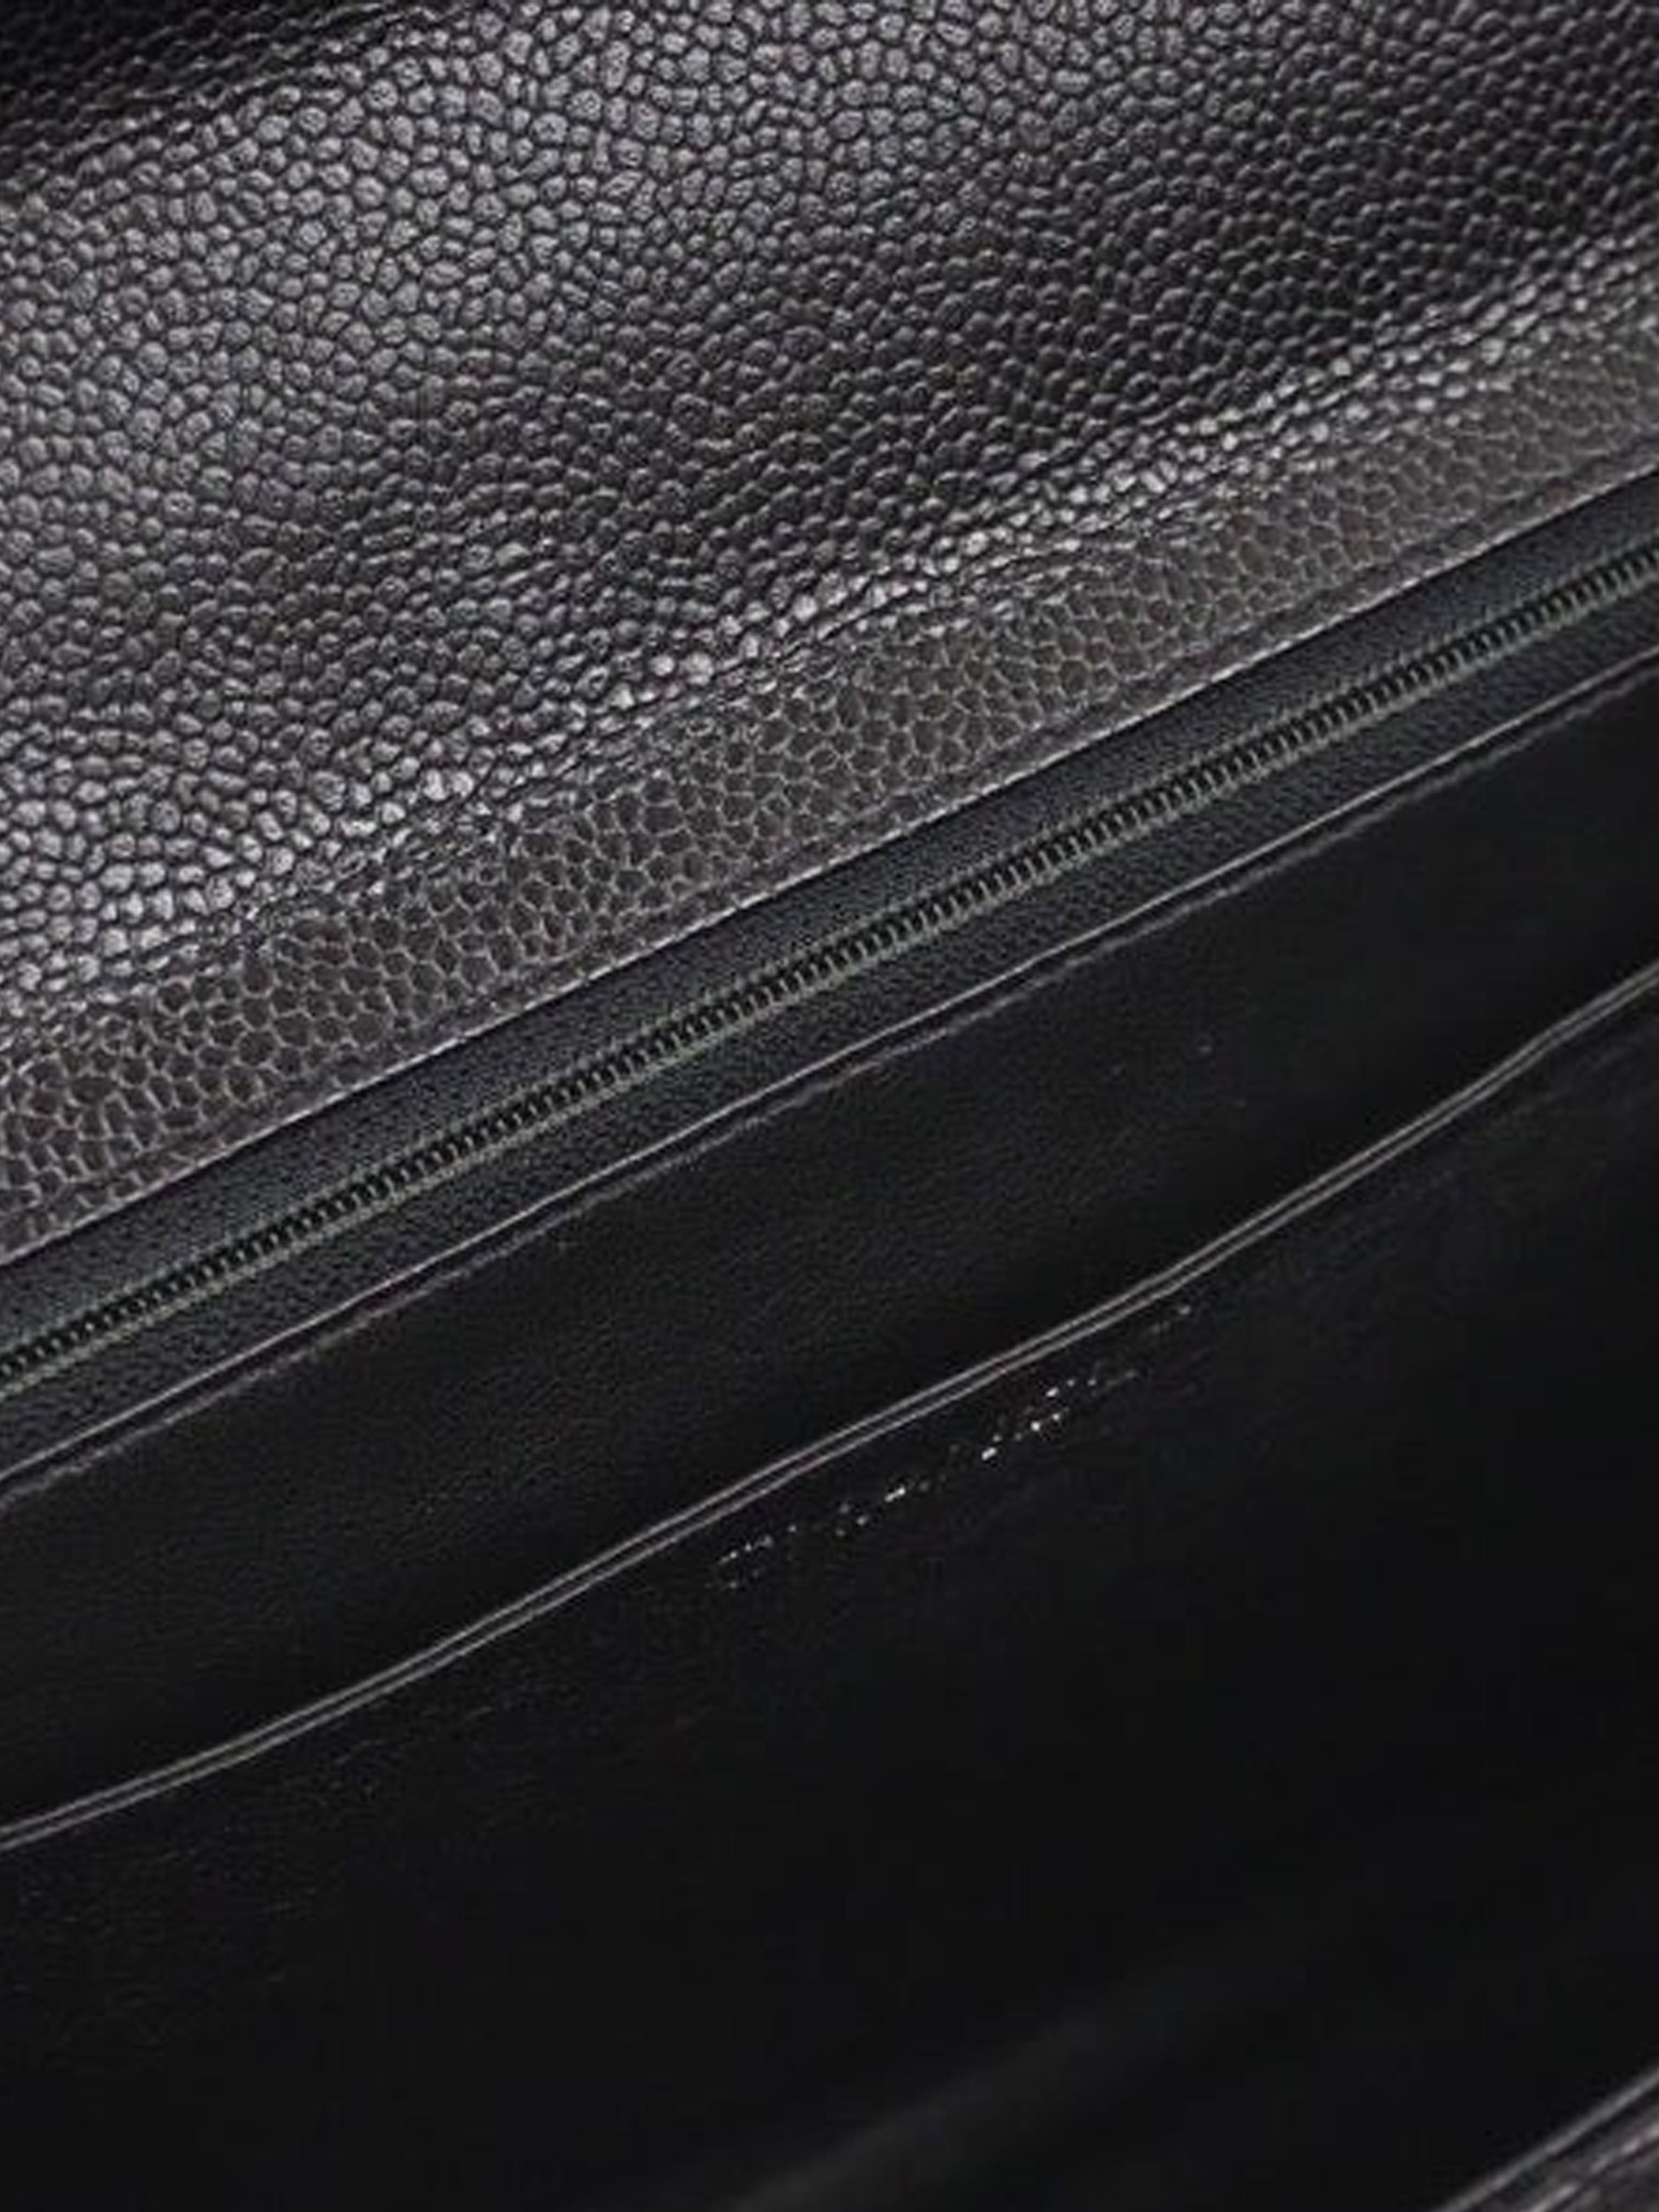 Chanel 2001 Caviar Leather Kelly Bag